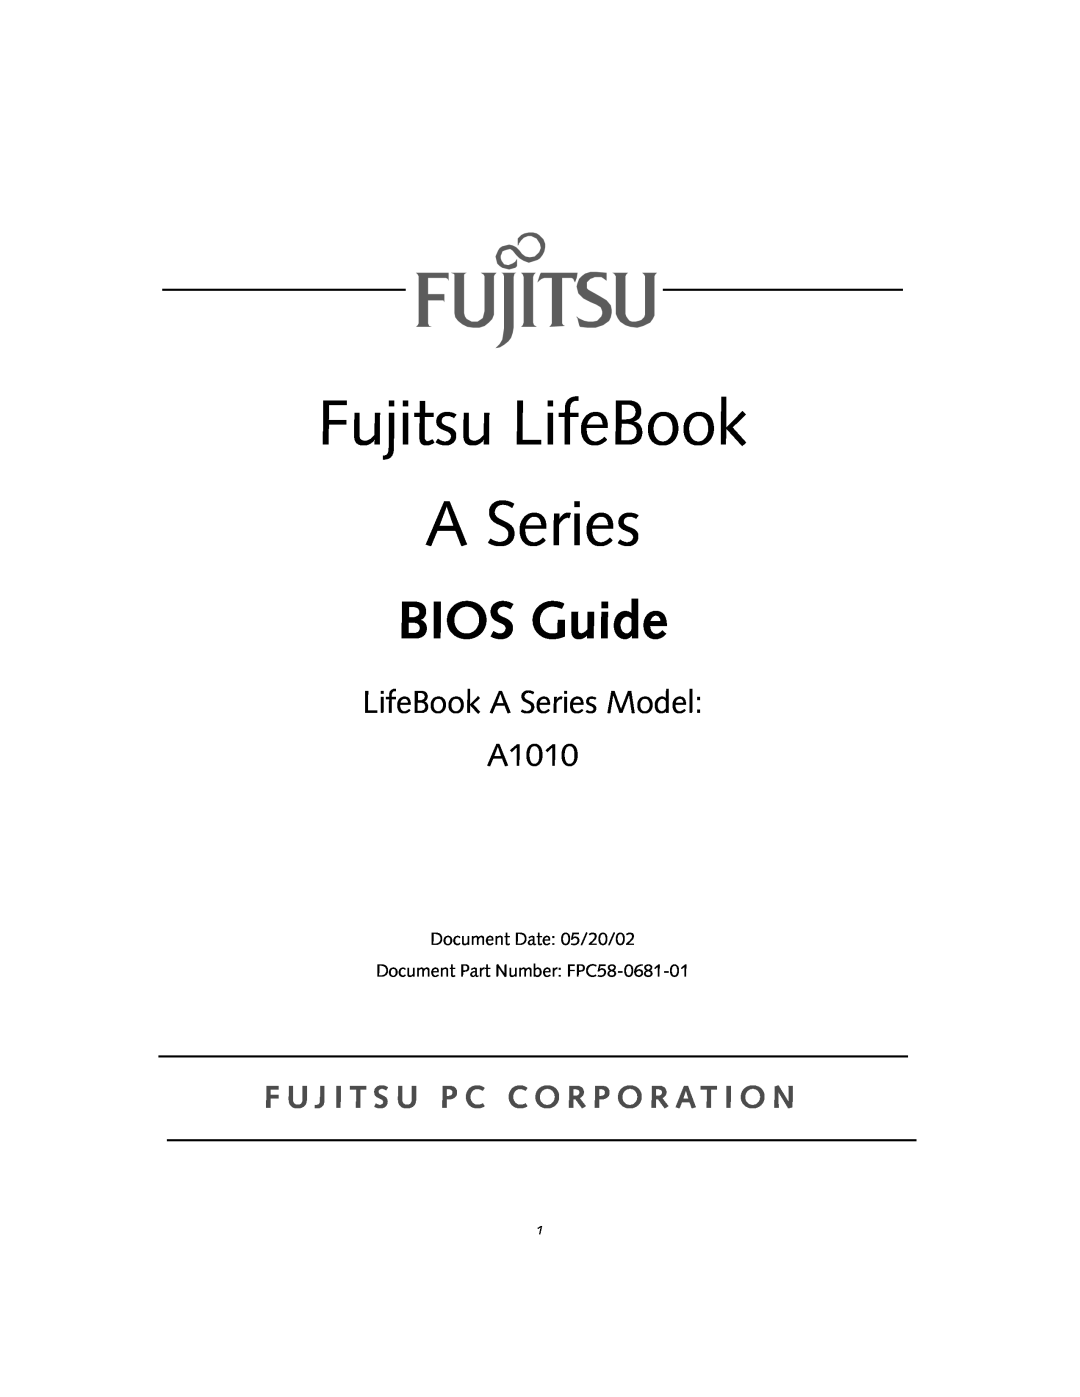 Fujitsu manual Fujitsu LifeBook A Series, BIOS Guide, LifeBook A Series Model A1010 